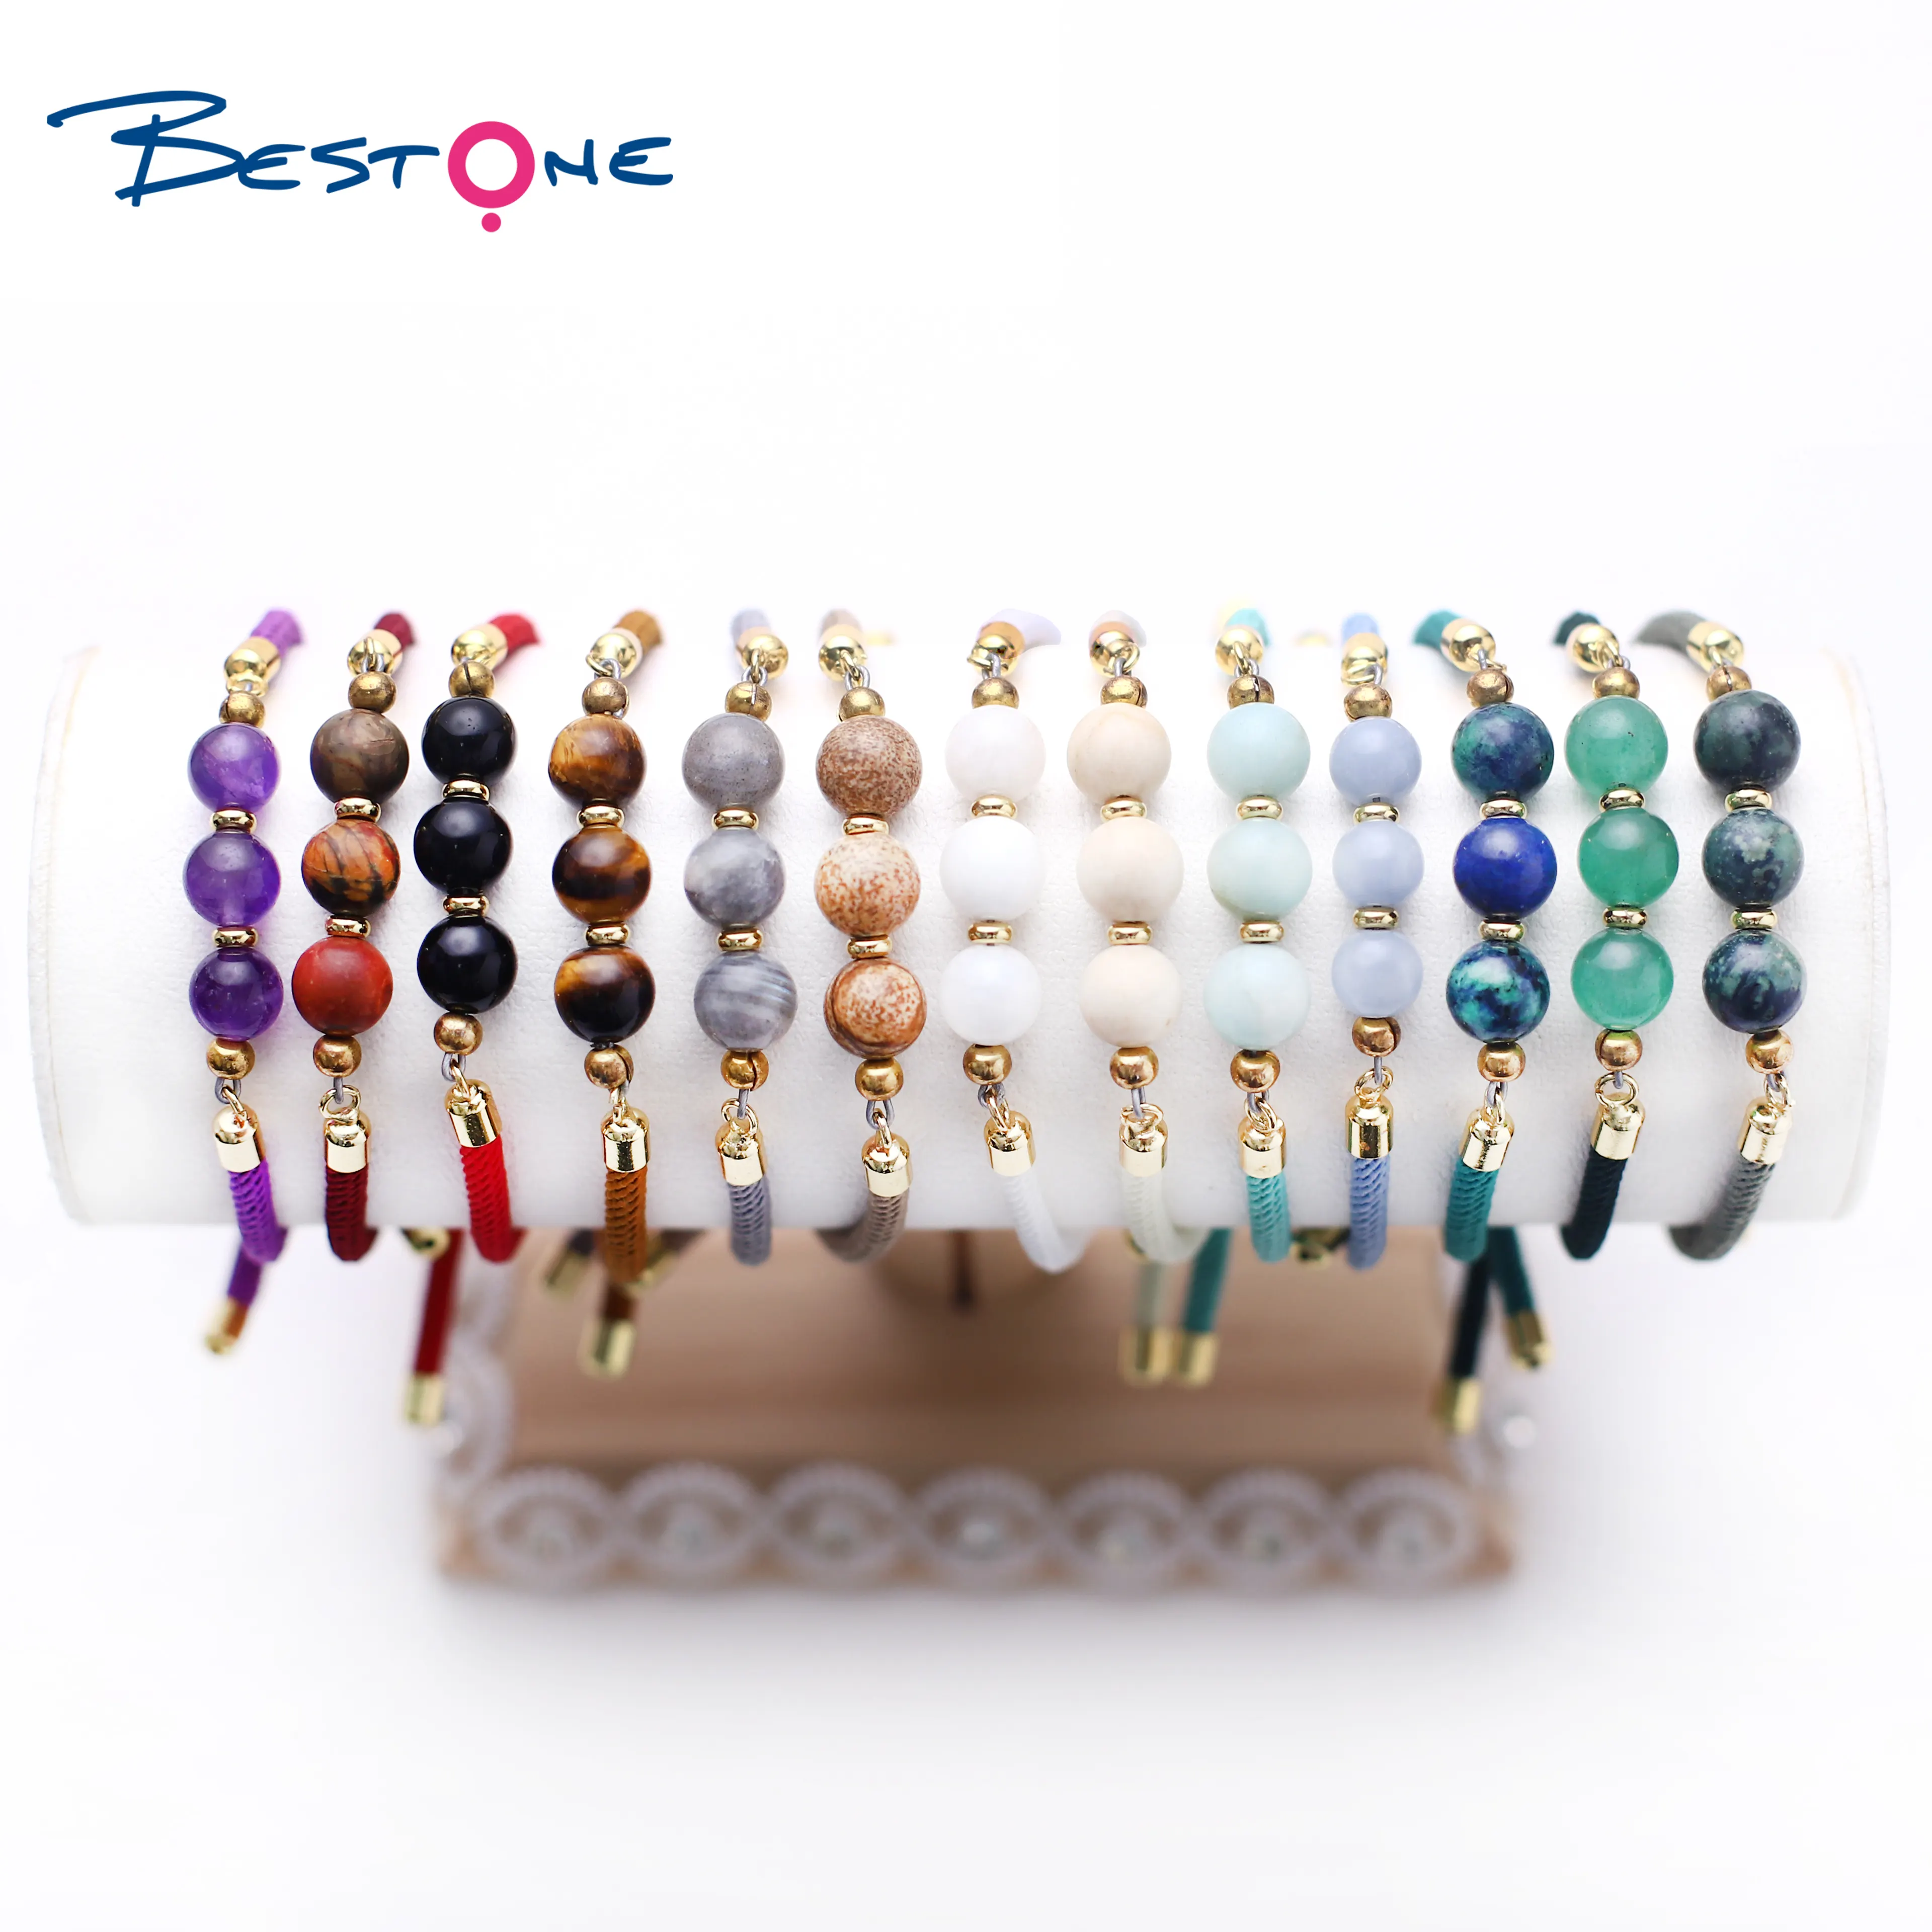 Bestone Custom Jewelry Natural Semi-precious Stone Beads Bracelets Adjustable Braided Colorful Nylon Rope Bracelet for Women